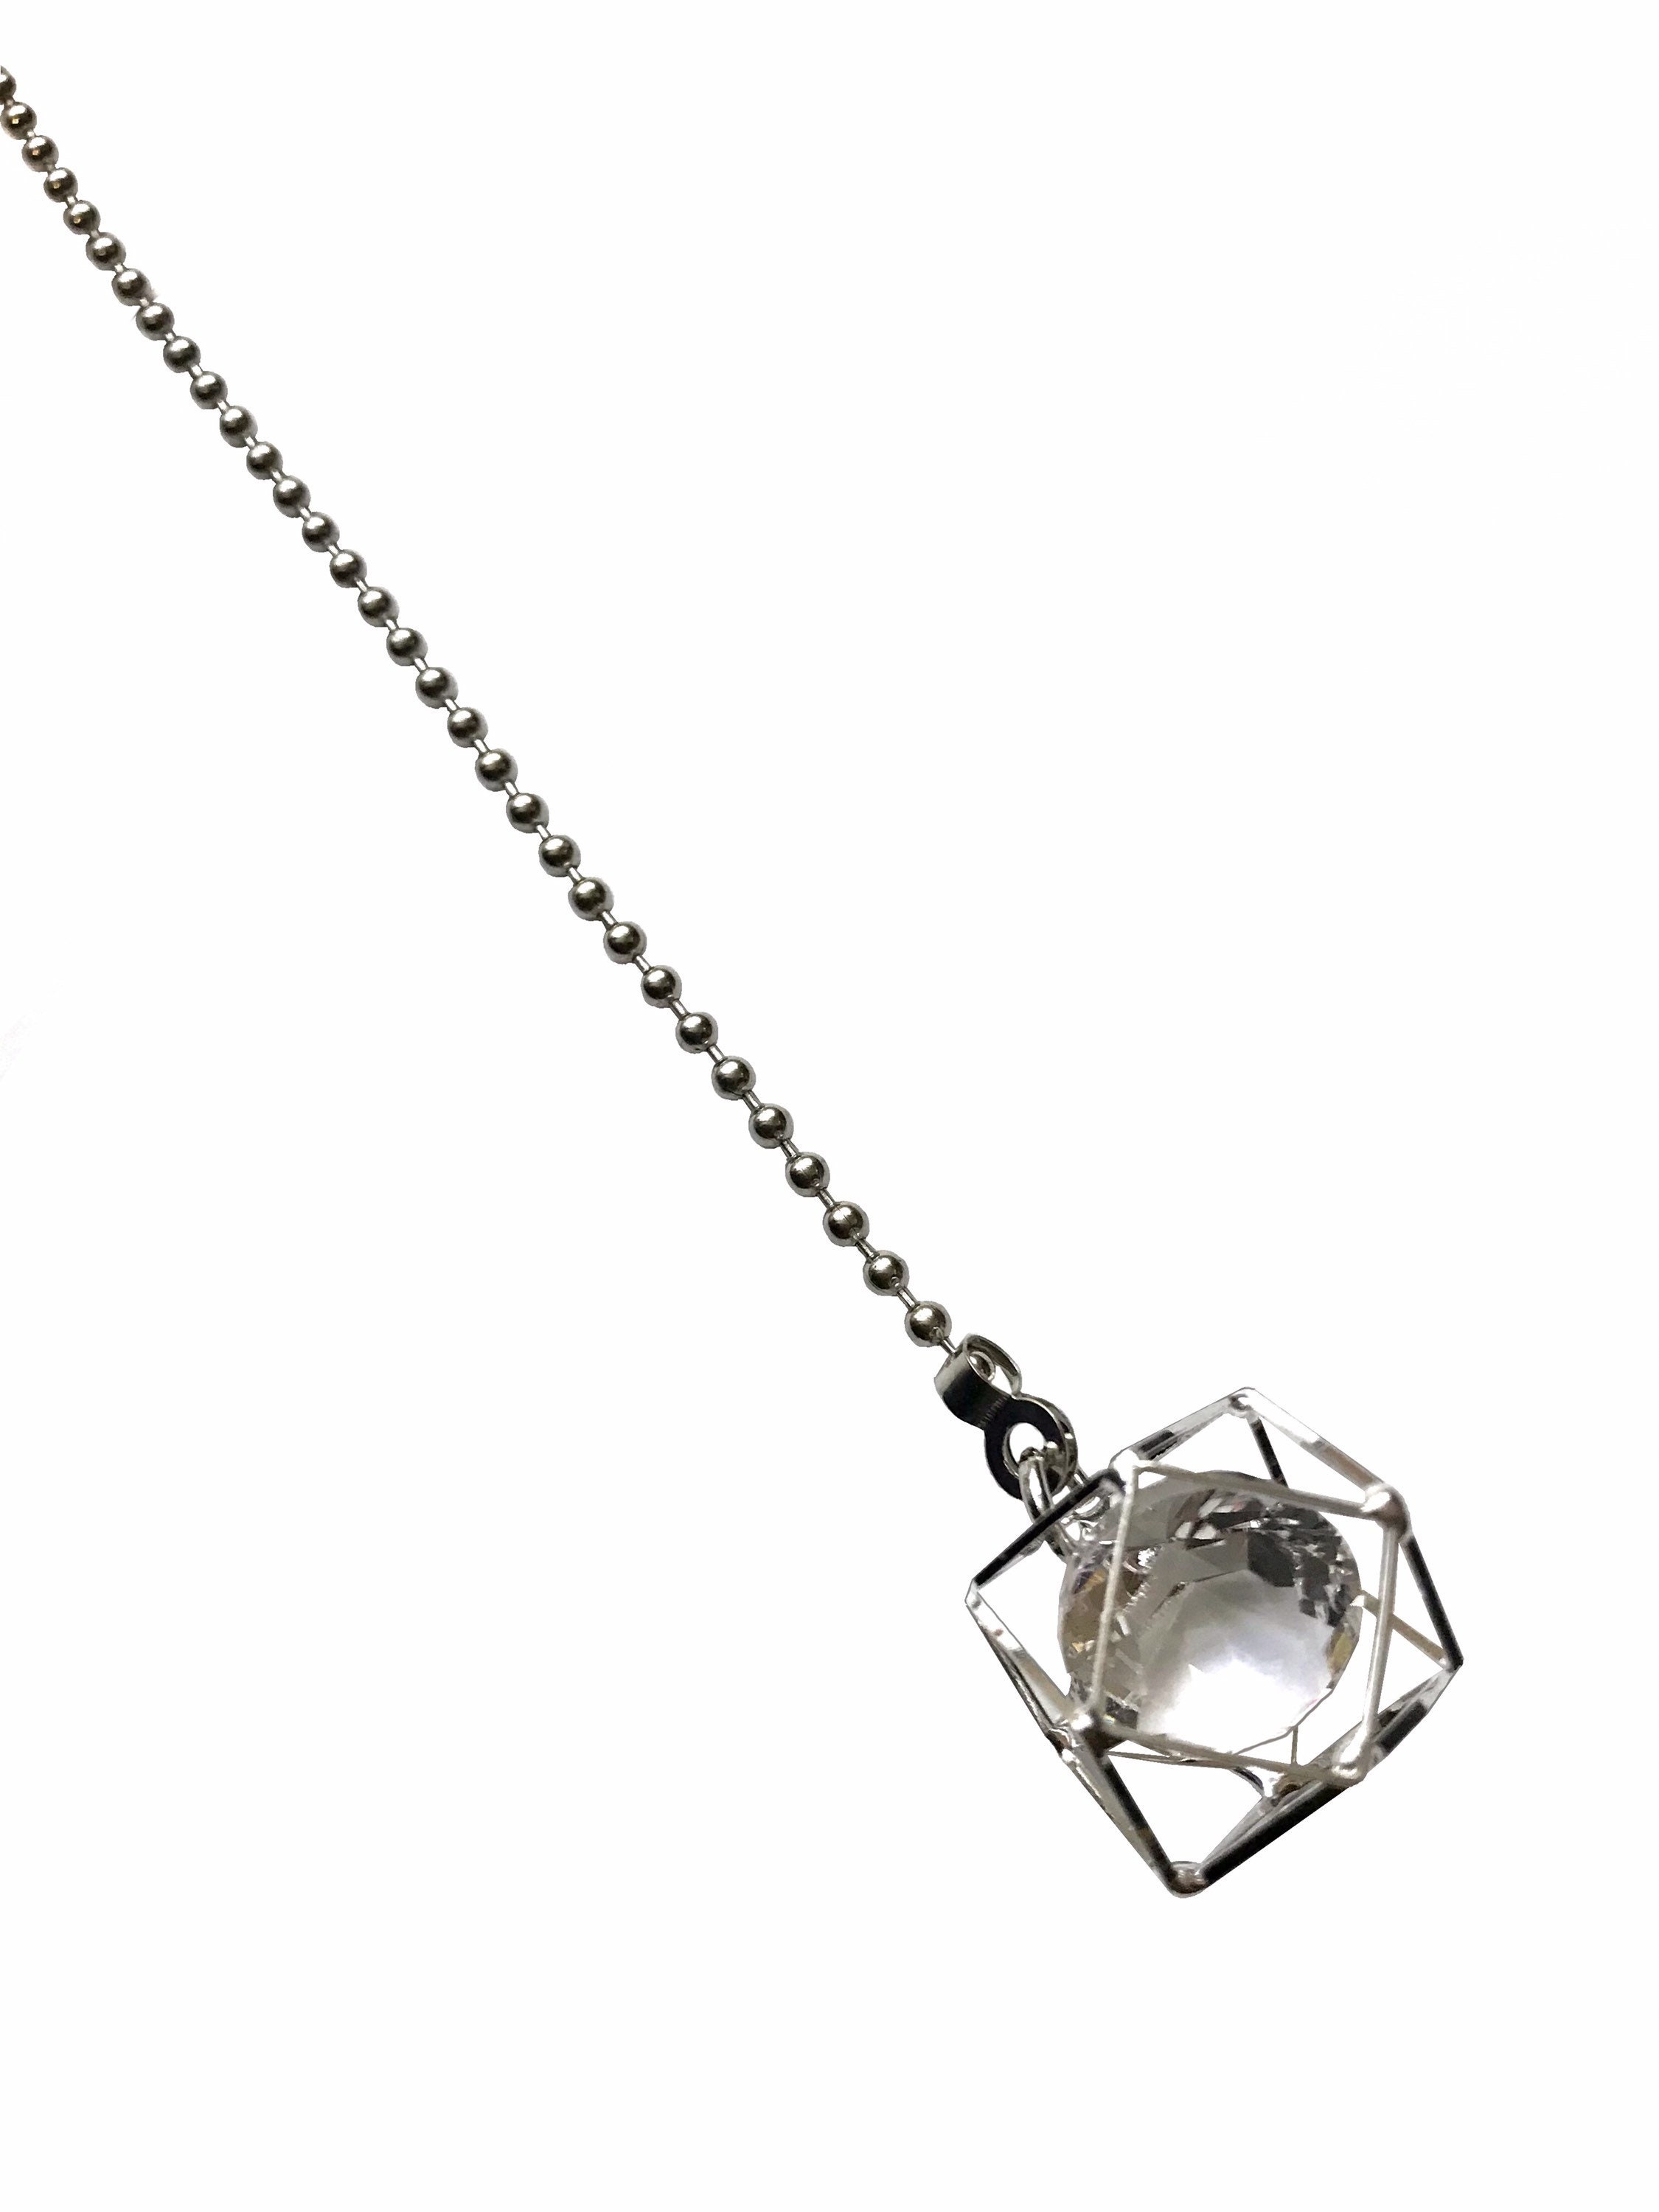 Crystal Ball Ceiling Fan Pull Chain, Swarovski Crystals Light Pull, Crystal  Prism